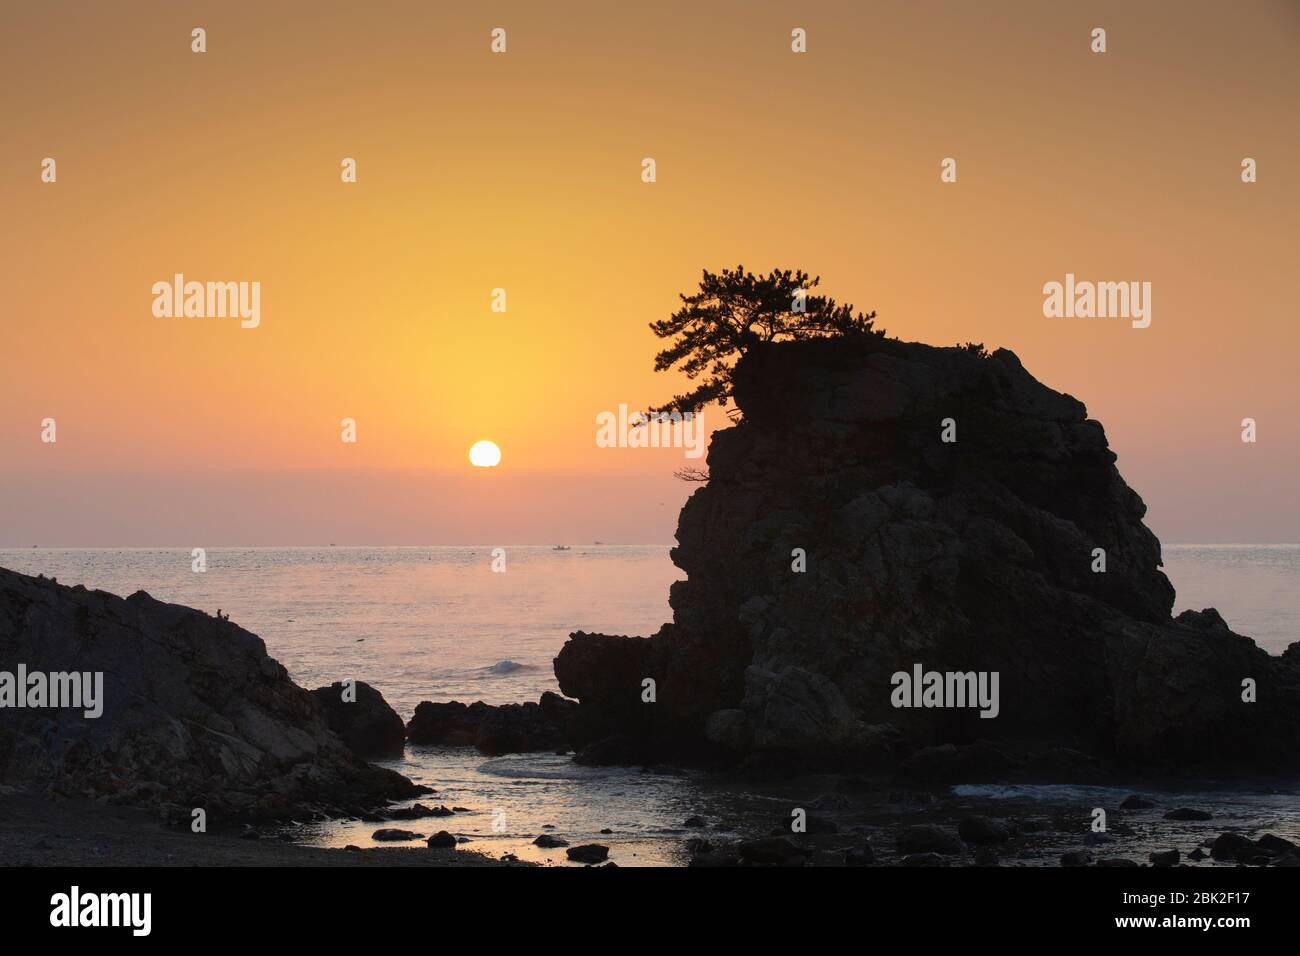 beautiful morning scenery of rocks with pine trees on the sea shore, beautiful landscape, East seaside Korea Stock Photo